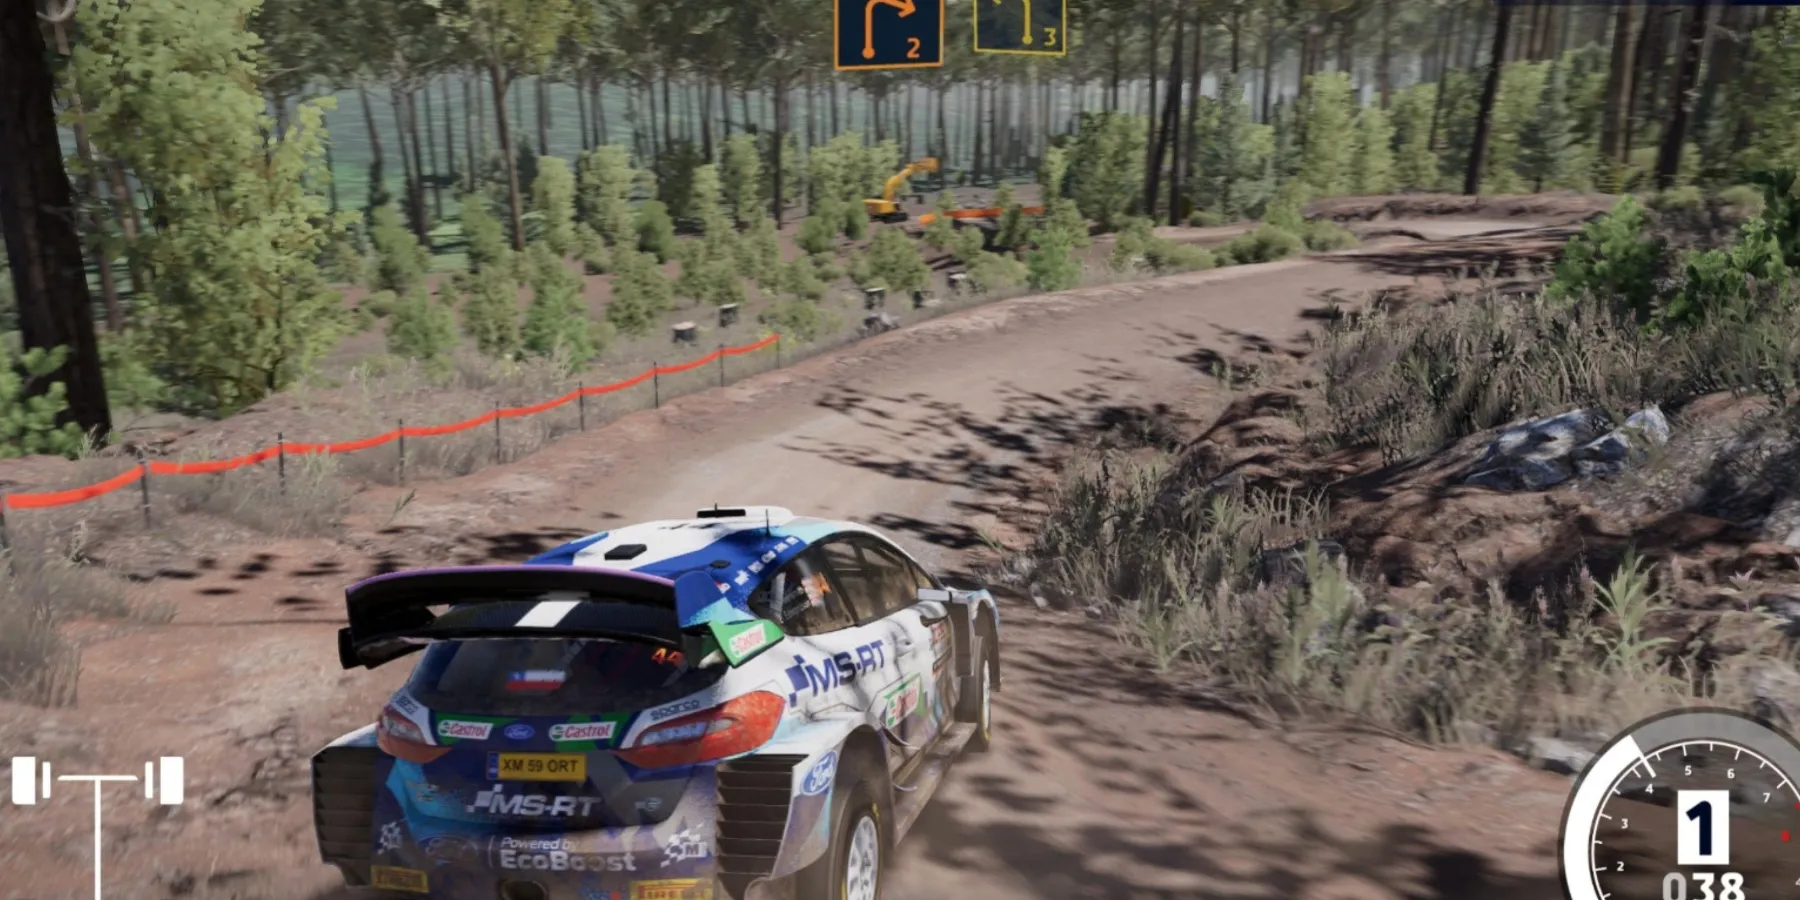 Rally car drifting on a dirt path